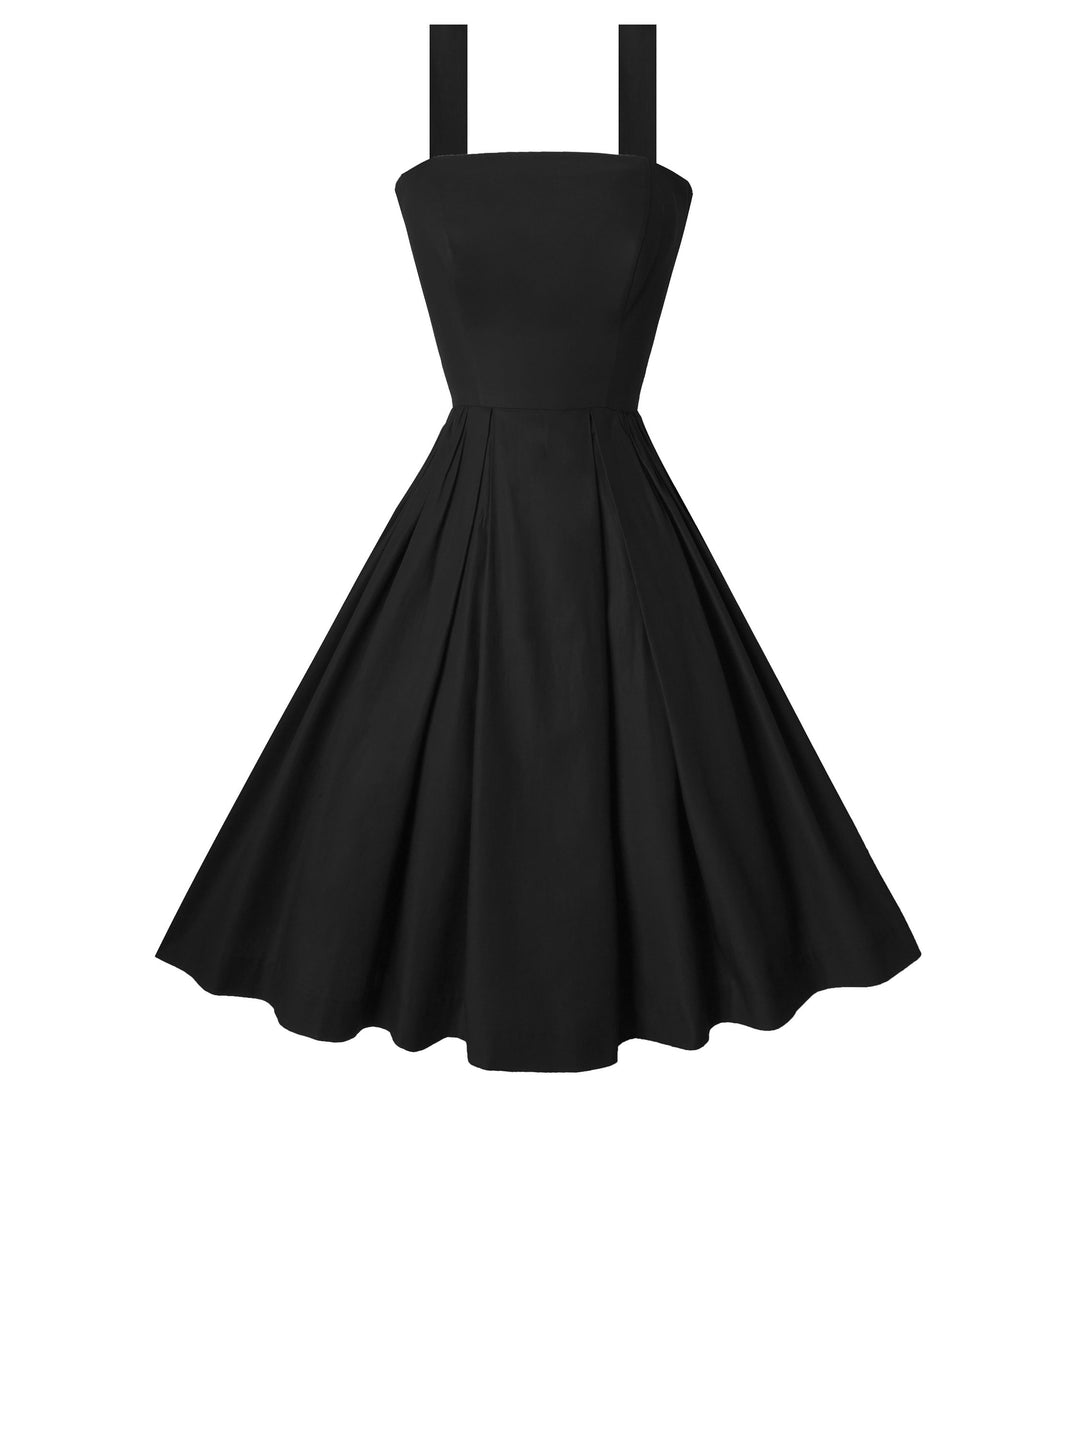 RTS - Size S - Lana Dress in Raven Black Cotton